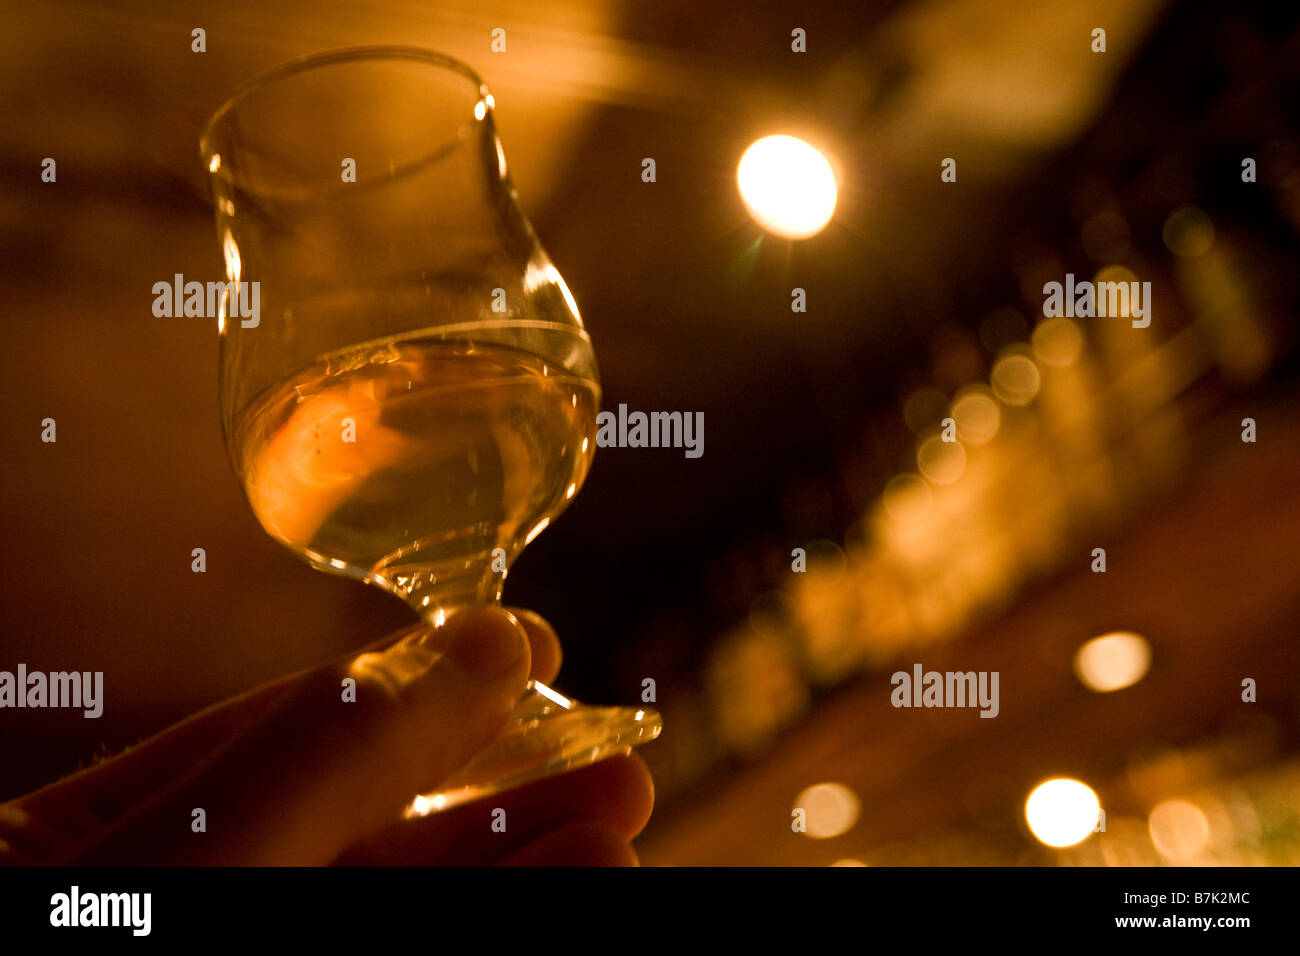 whisky tasting glass Stock Photo